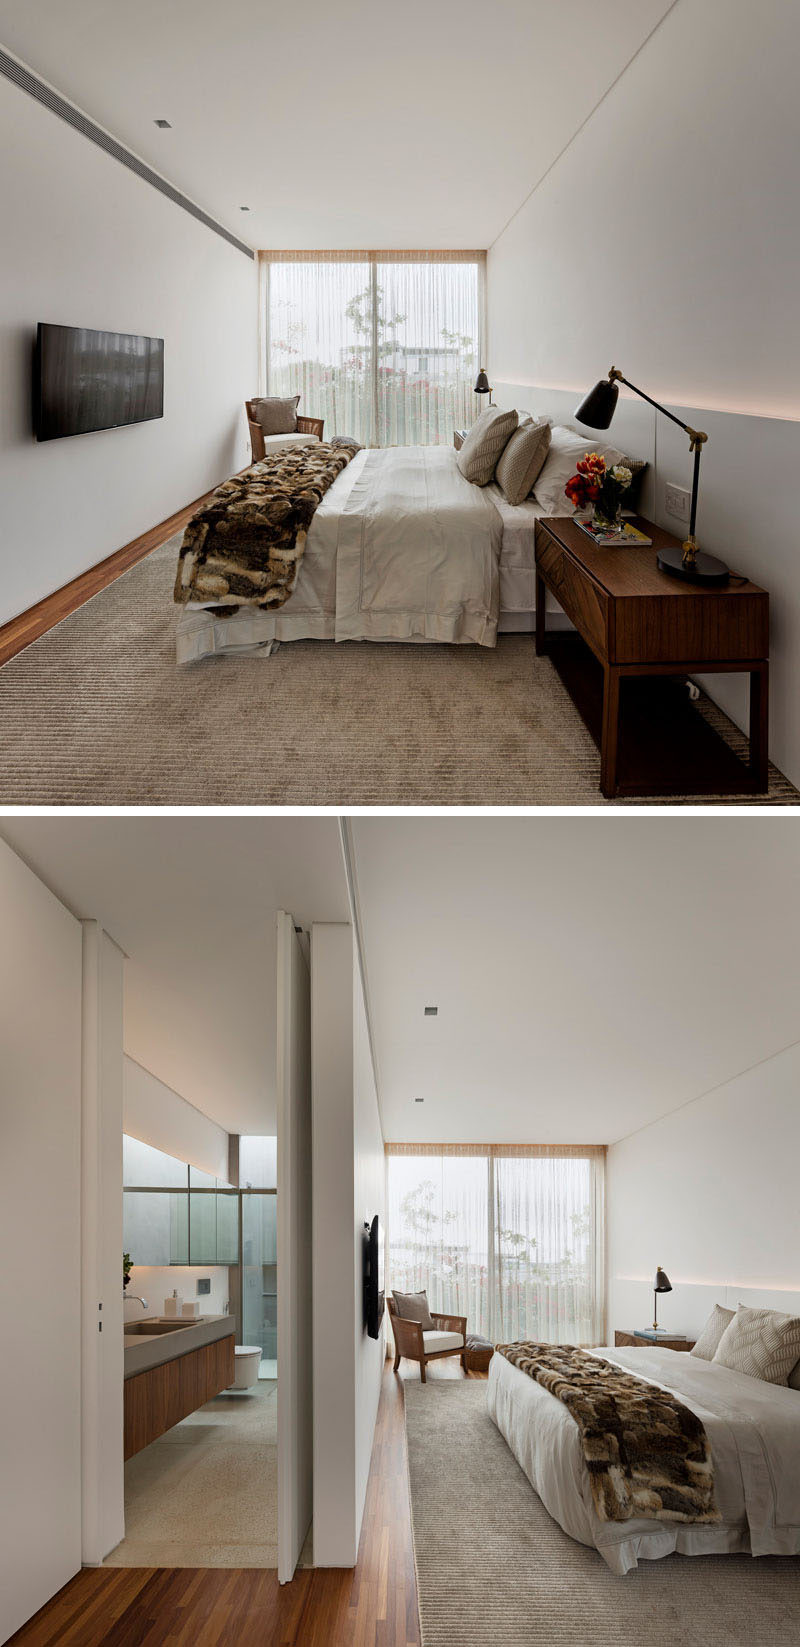 This bedroom has soft lighting hidden behind the custom-built headboard that runs the length of the room.